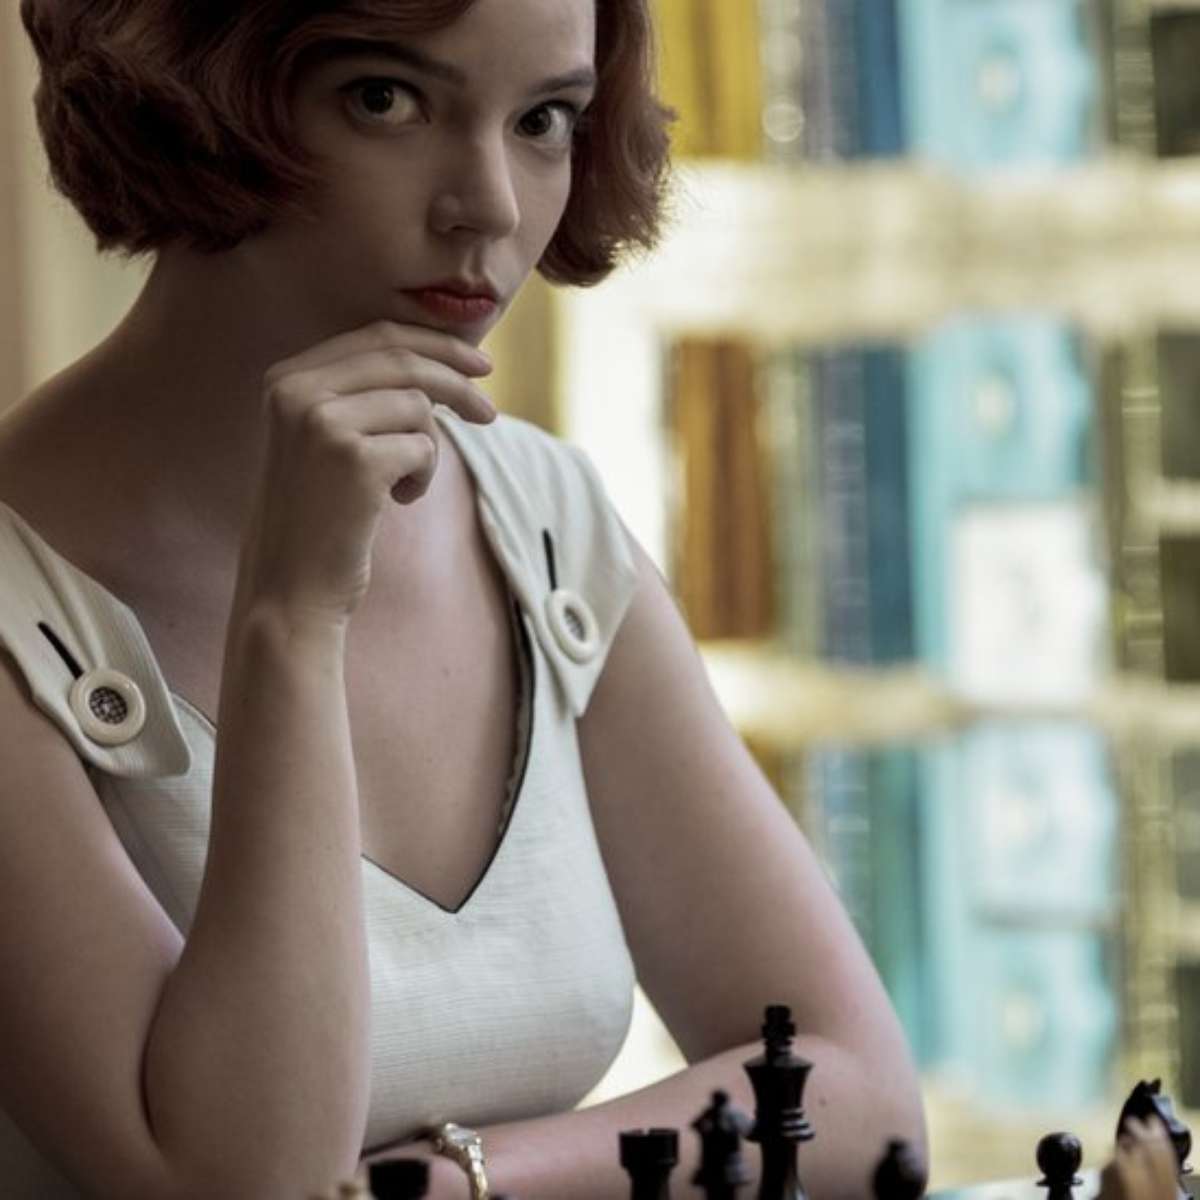 Que erros a série 'O gambito da rainha' cometeu ao tentar representar o  Xadrez? - Quora